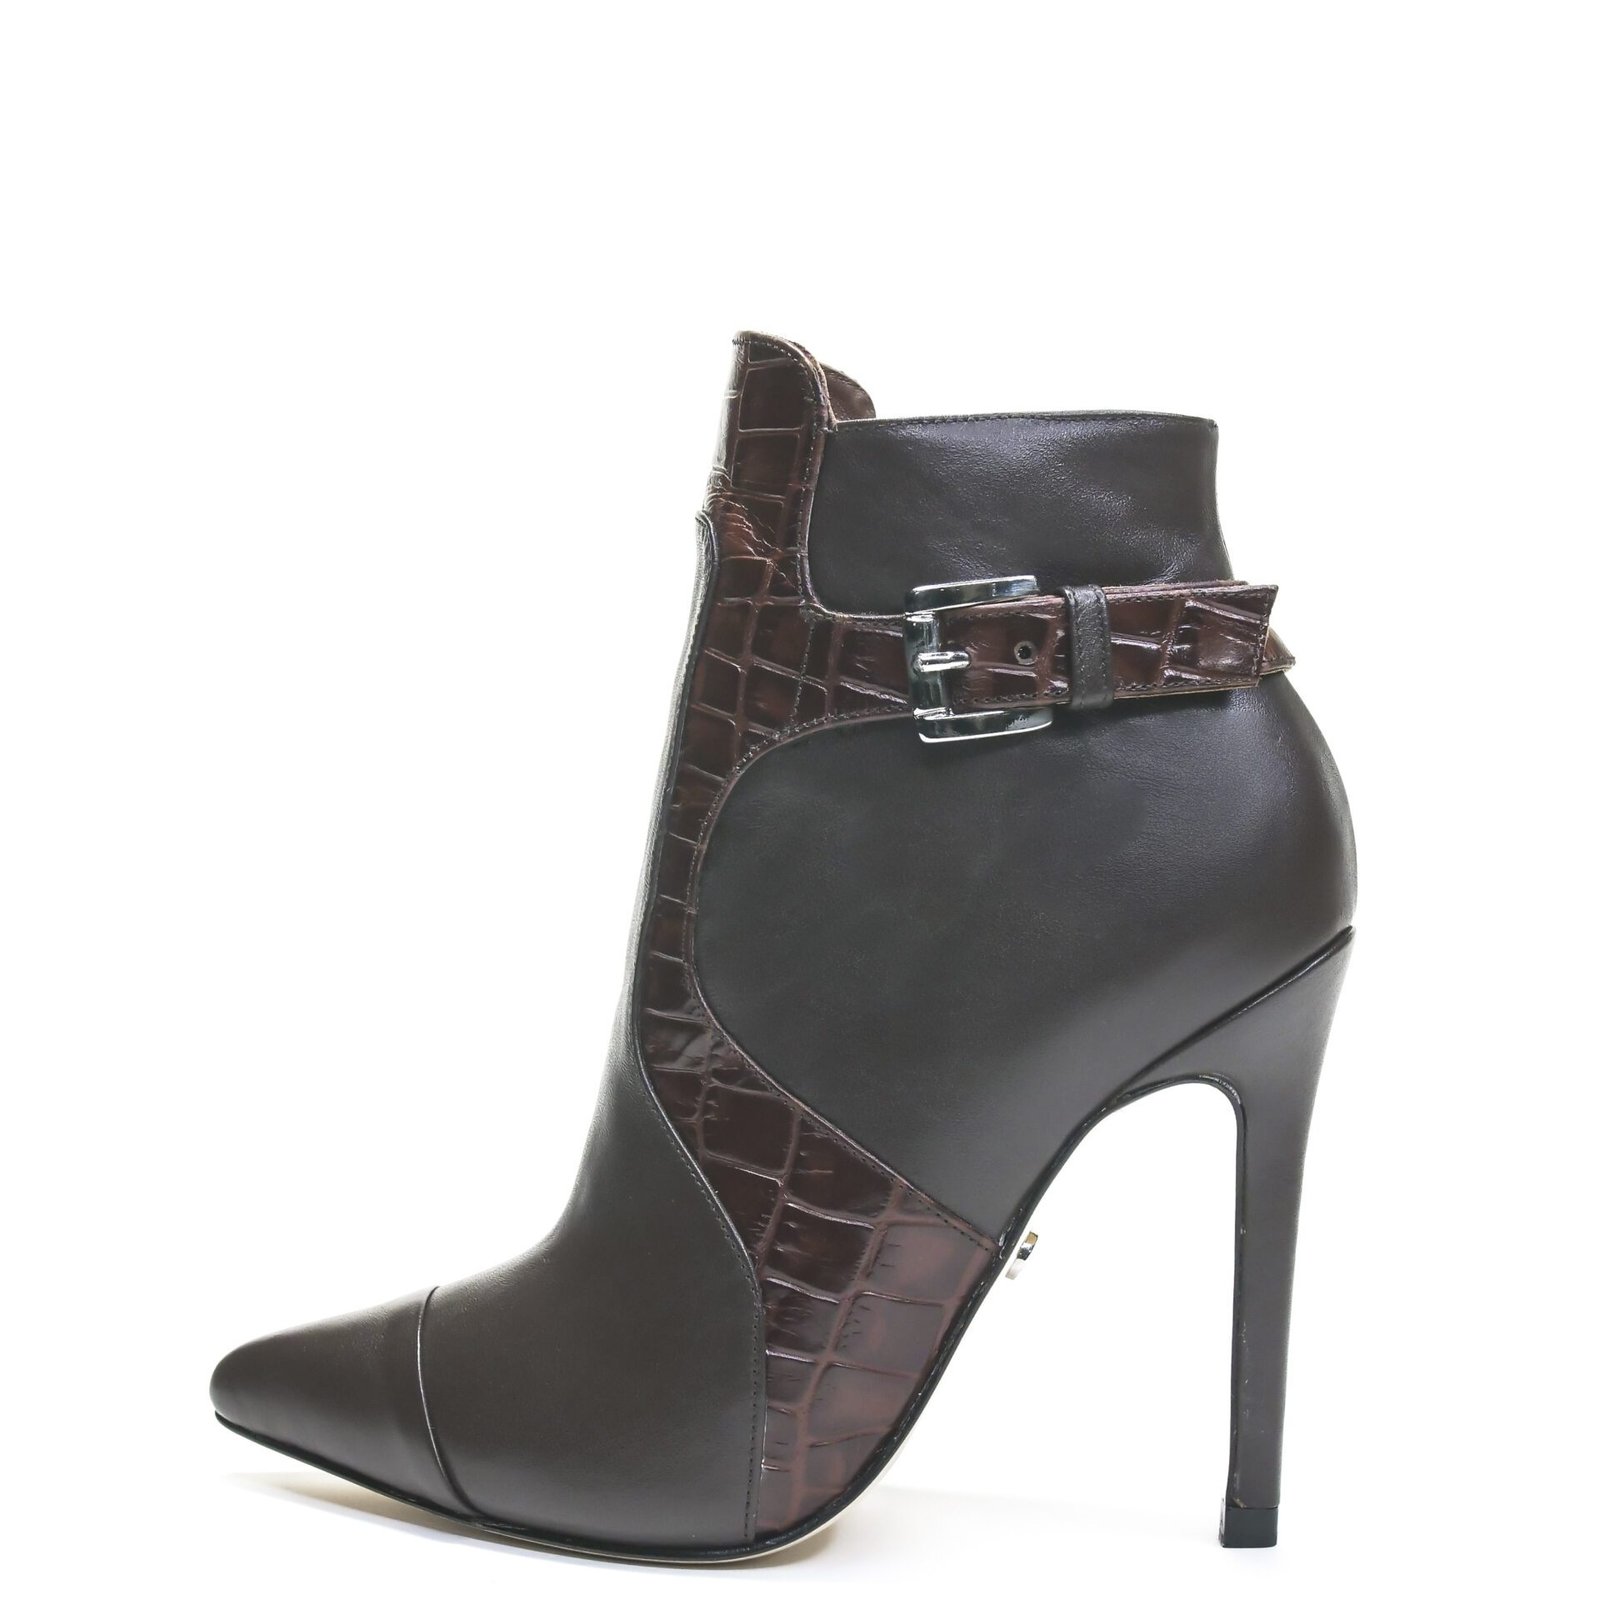 brown ankle bootie with heel for men & women